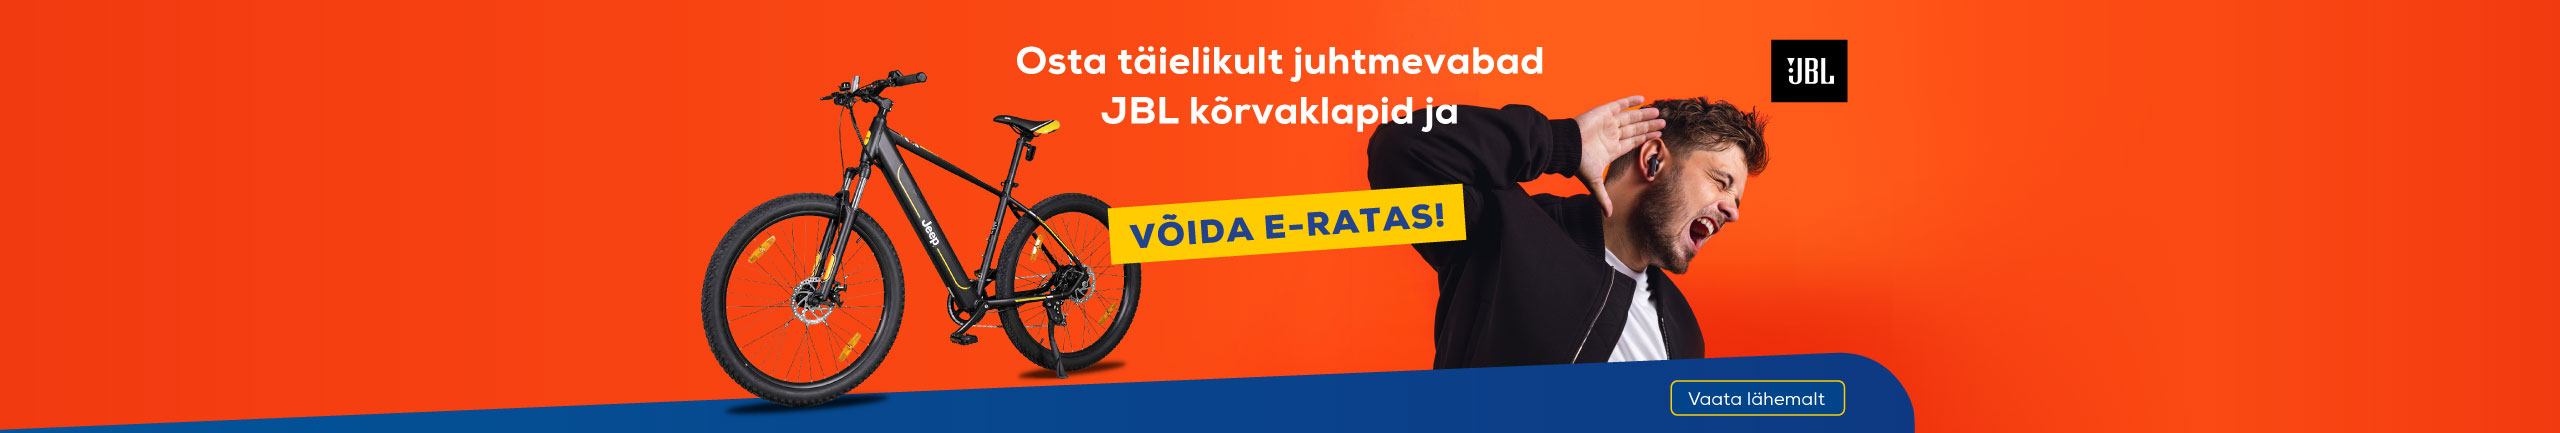 Buy JBL true wireless headphones and win an electric bike!